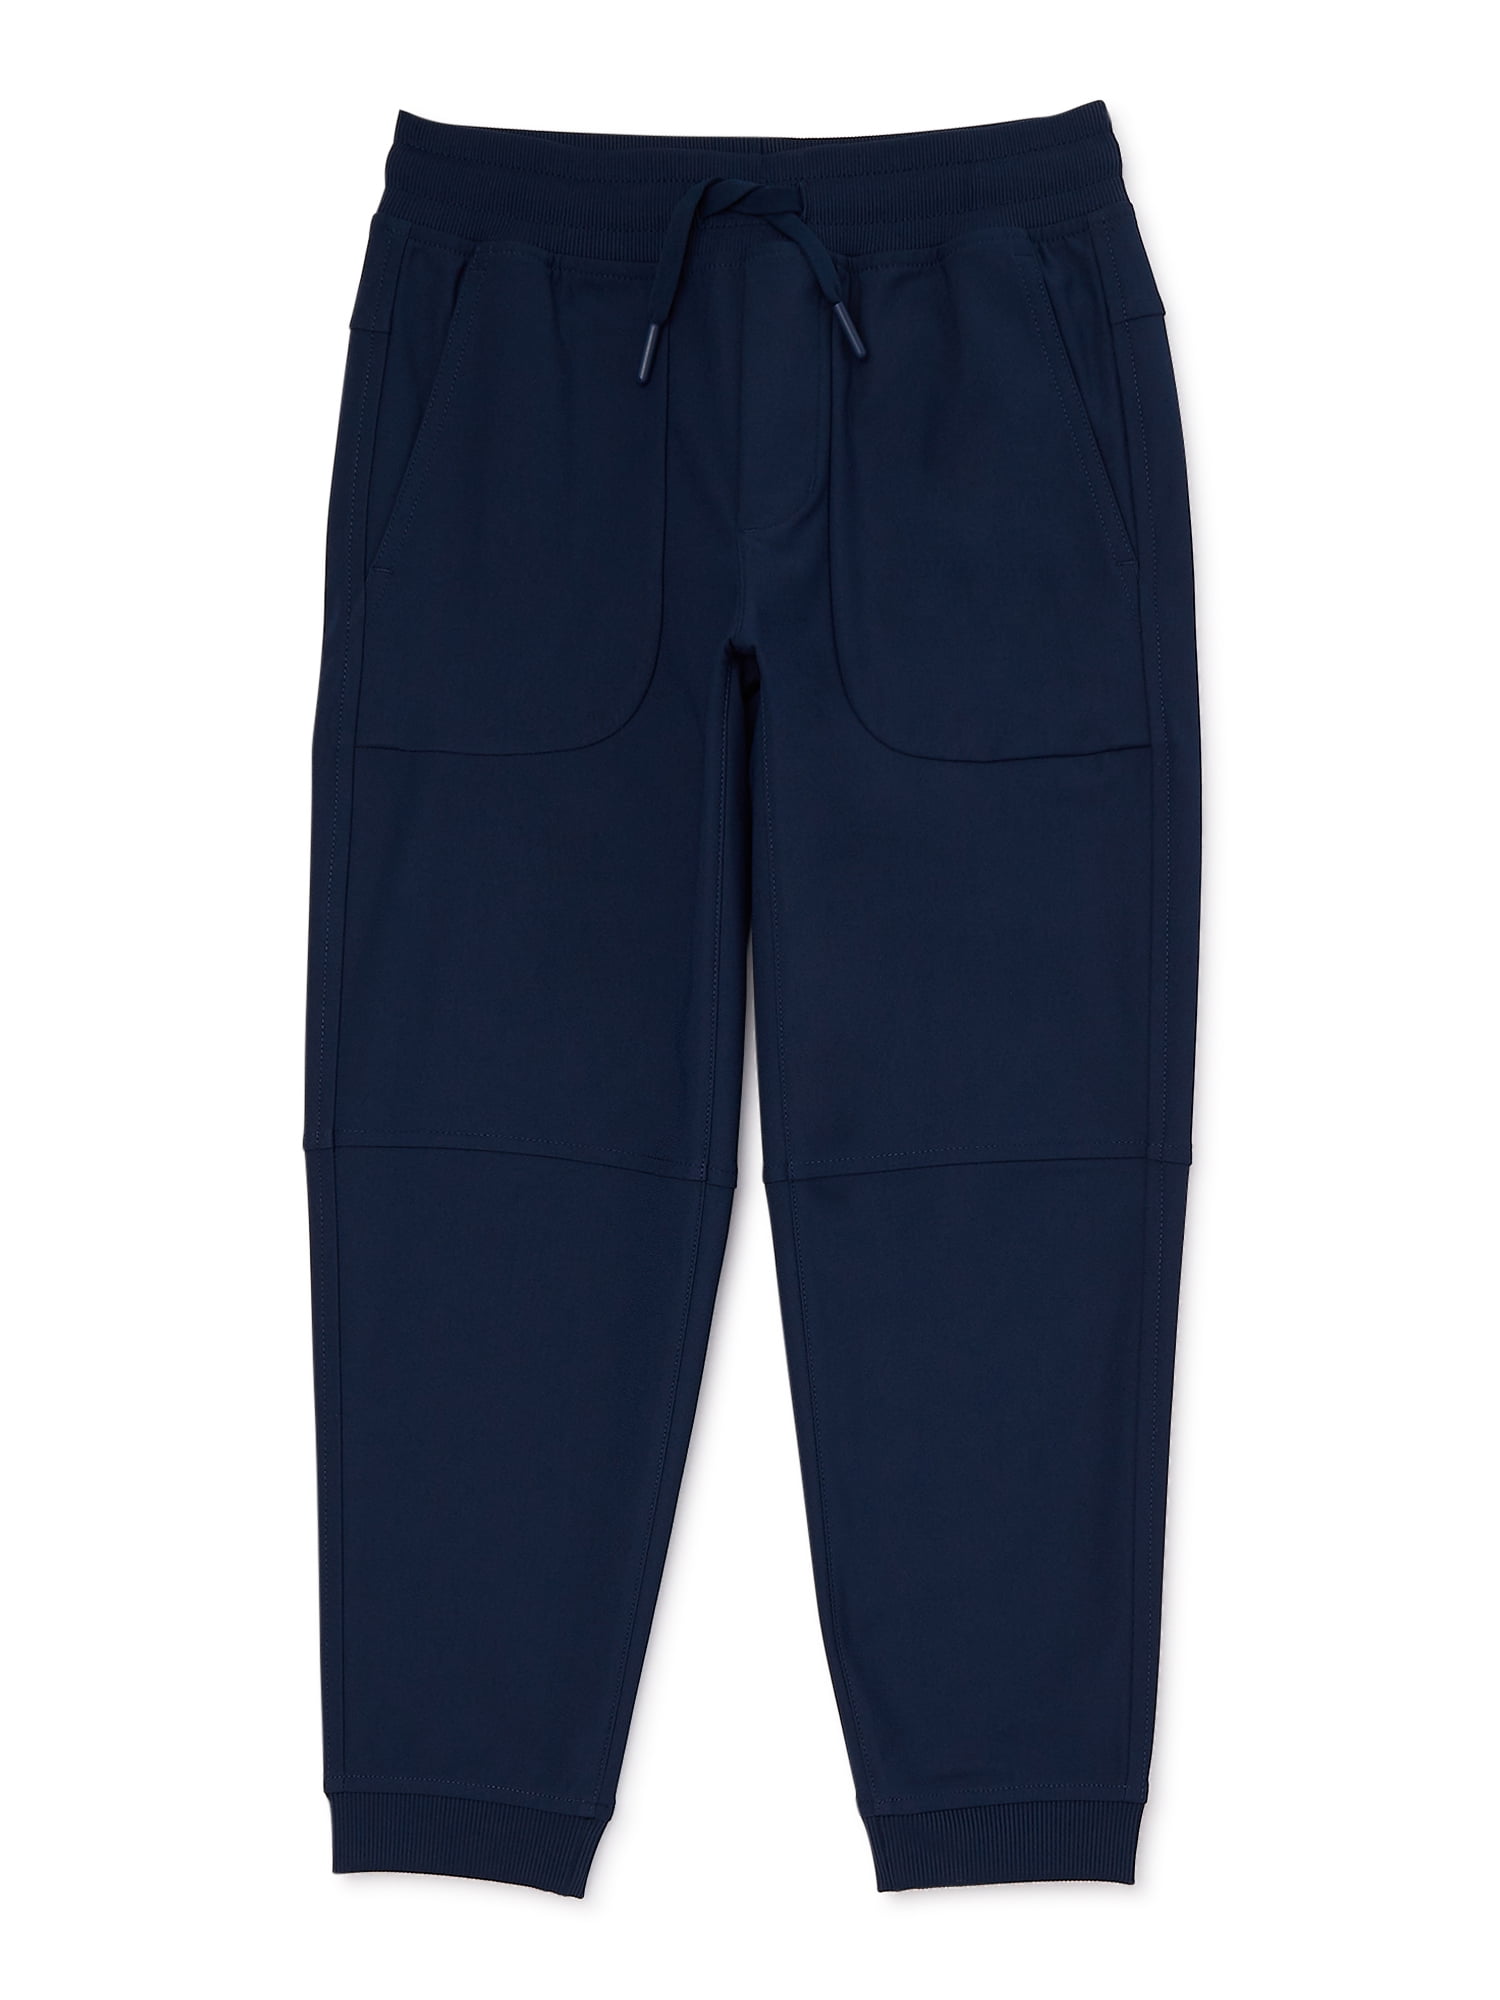 Woven Jogger Pants - Navy Blue